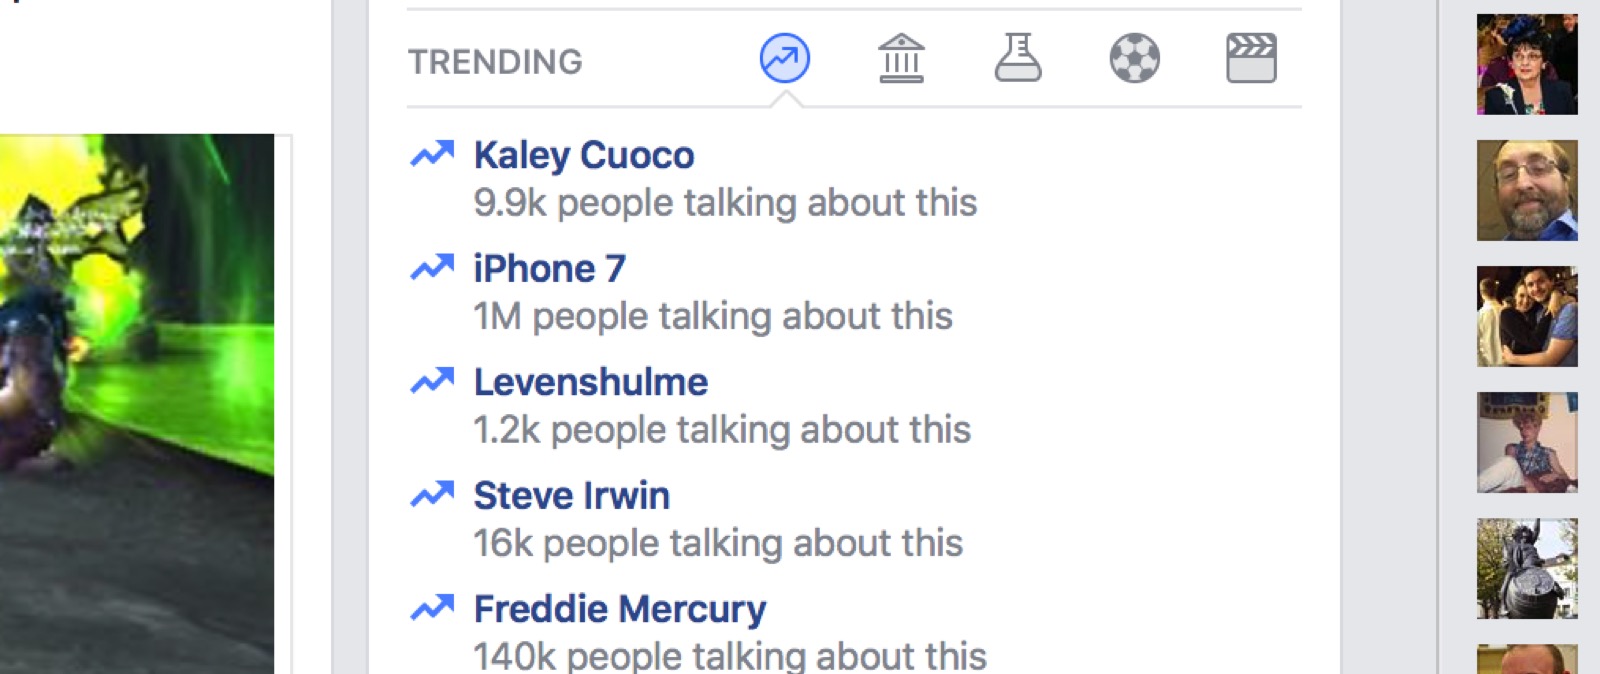 Understanding Facebook's quasi-journalistic trending algorithm